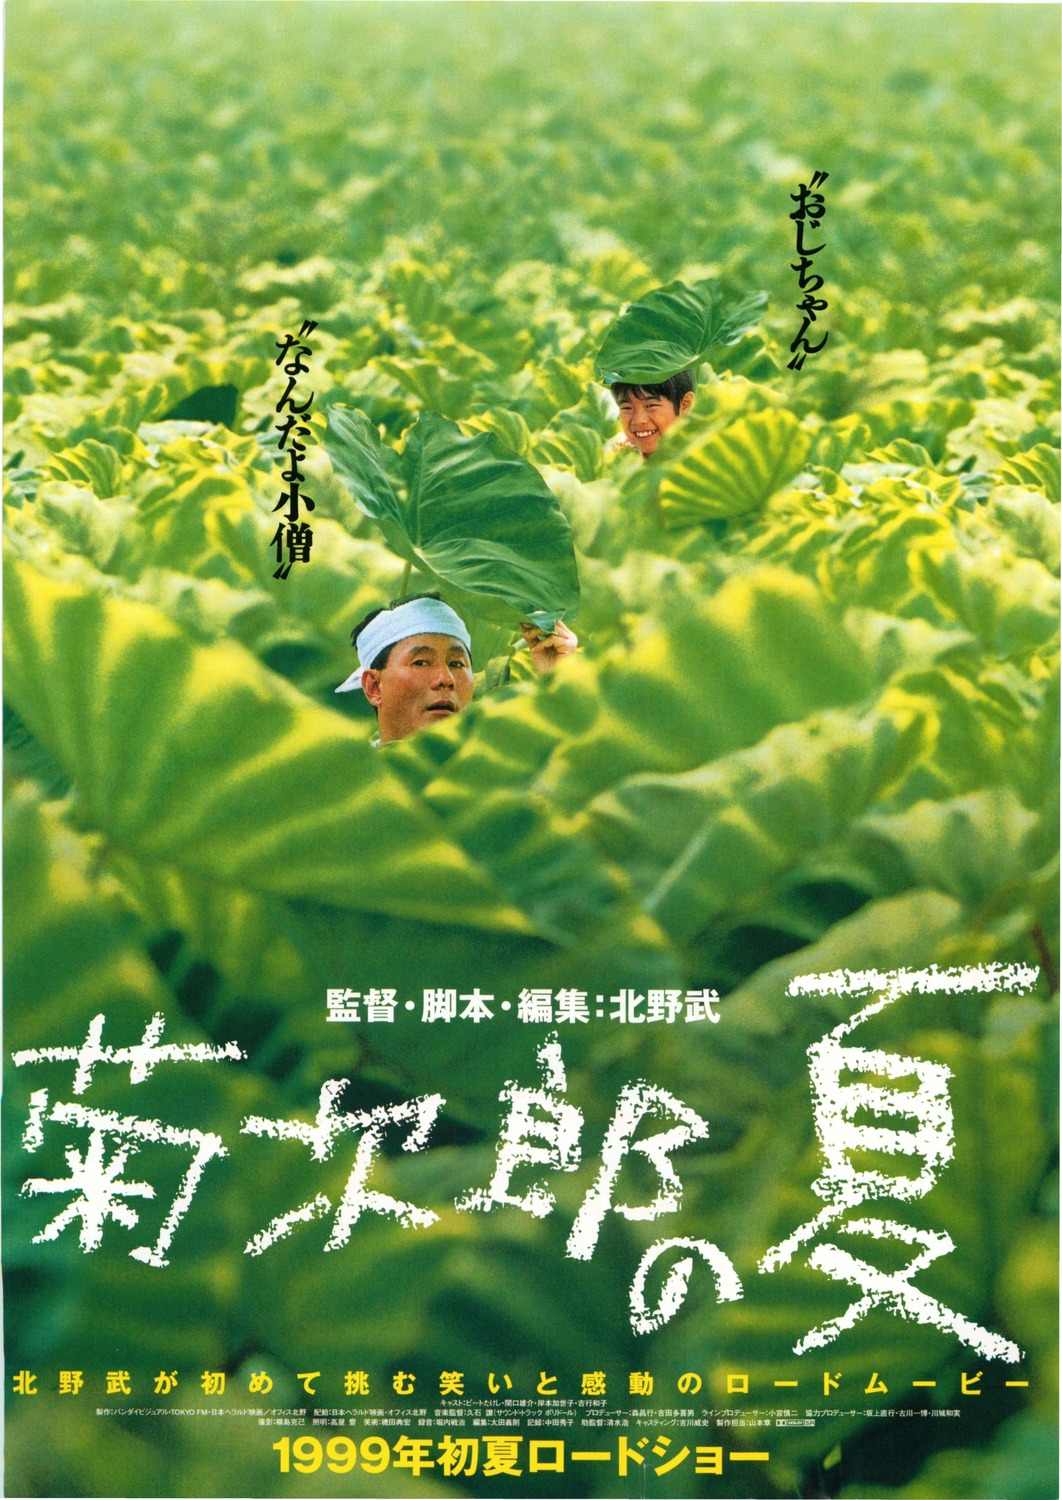 Extra Large Movie Poster Image for Kikujirô no natsu (#1 of 2)